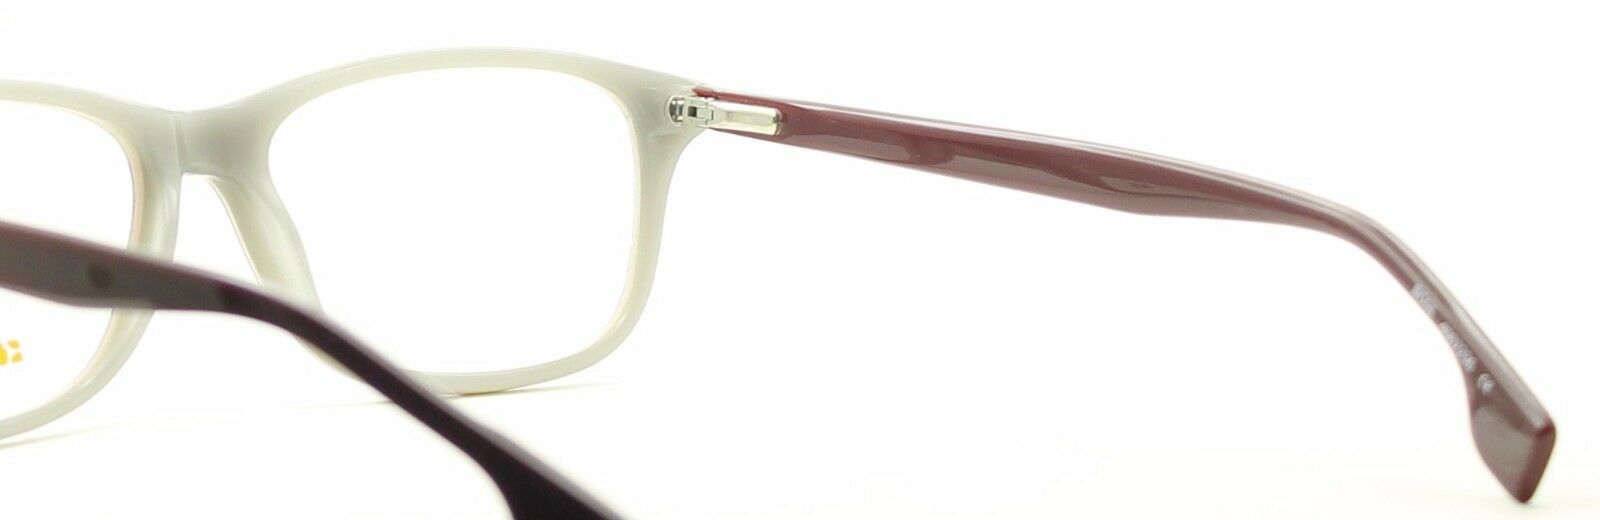 BOSS ORANGE BO 0056 25636147 Eyewear FRAMES NEW RX Optical Glasses Eyeglasses